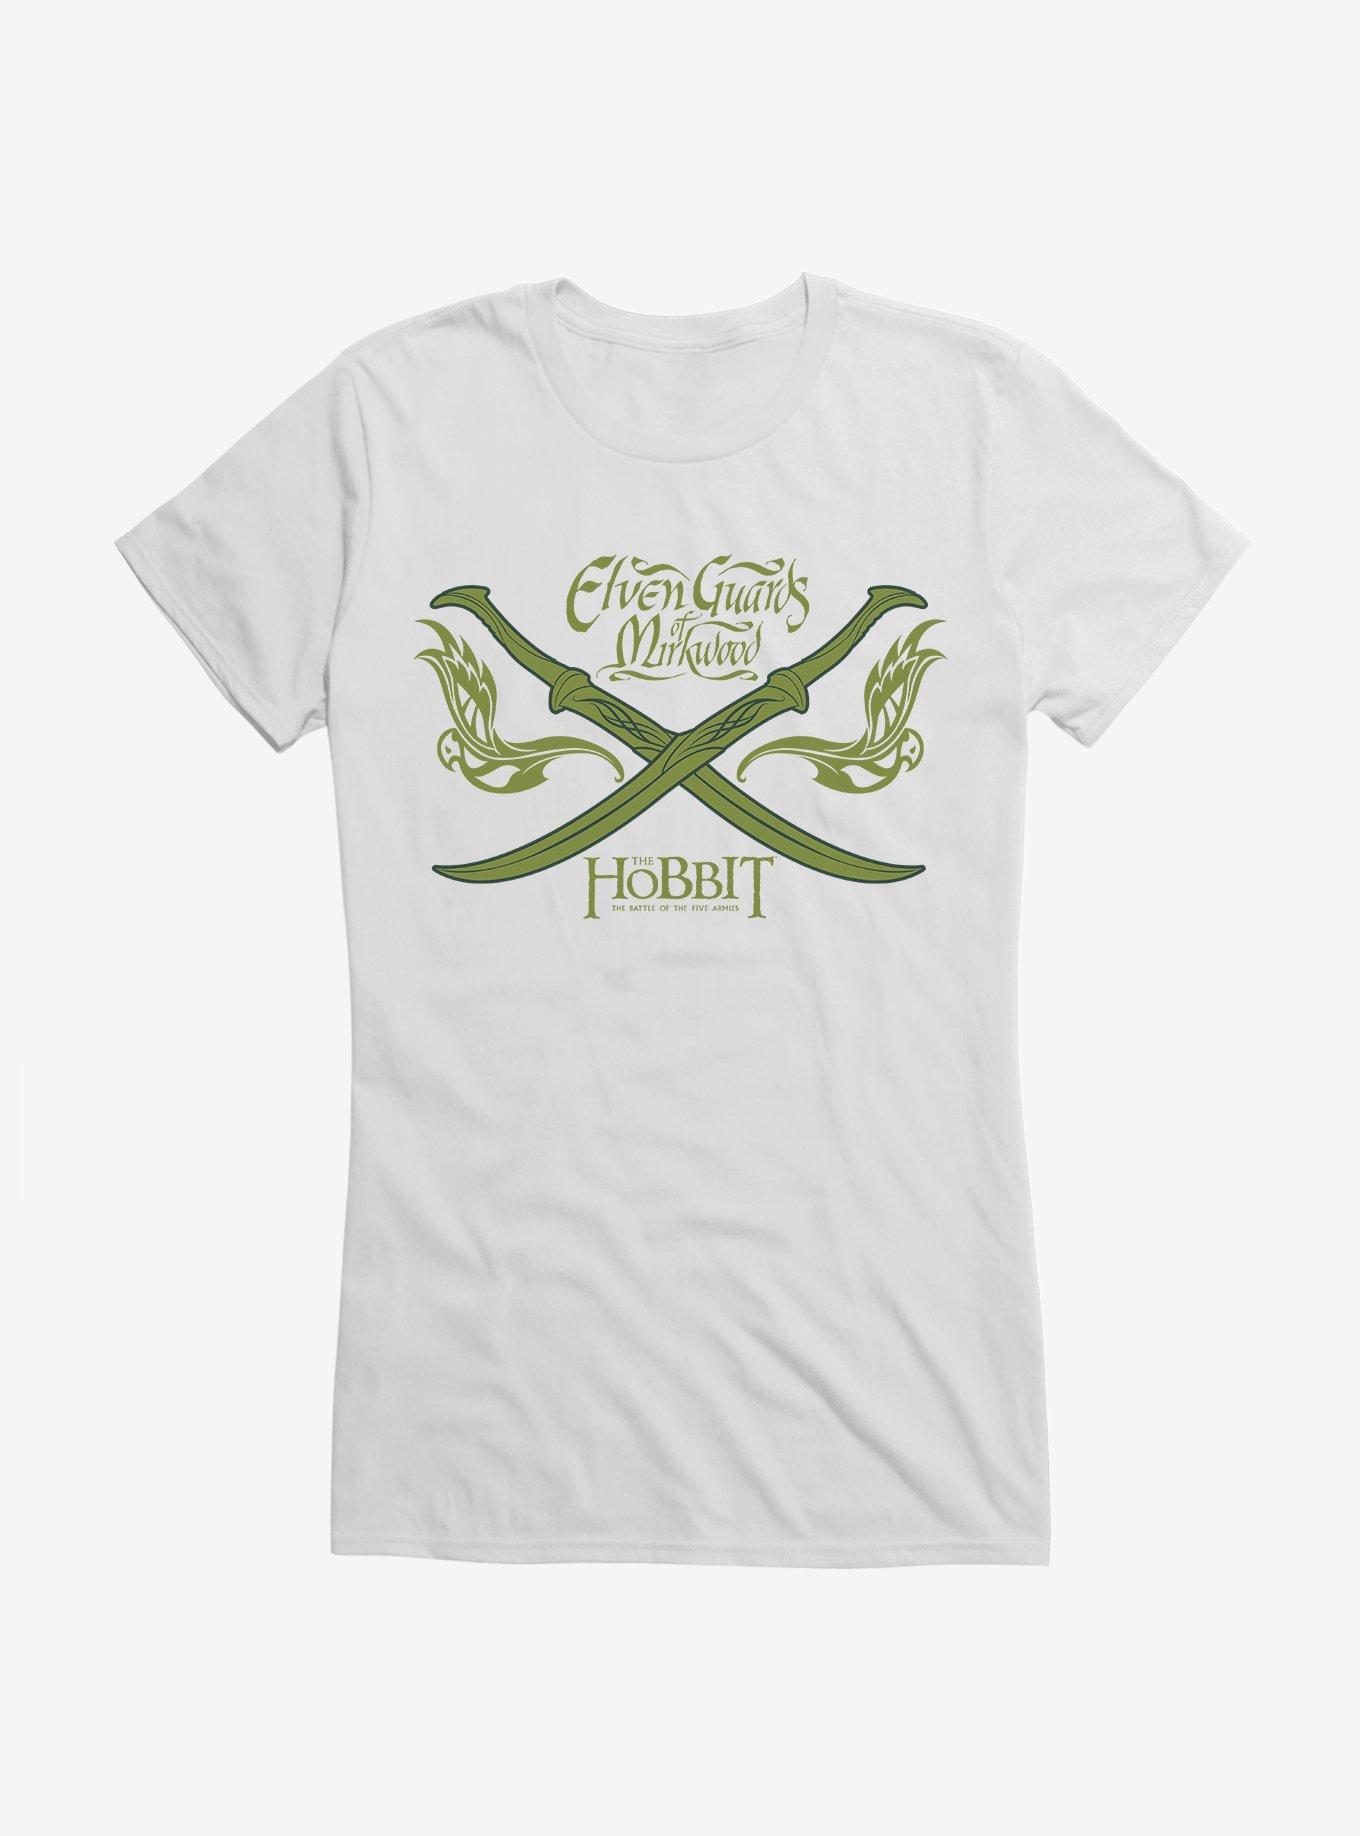 The Hobbit: Battle Of Five Armies Elven Guards Mirkwood Girls T-Shirt